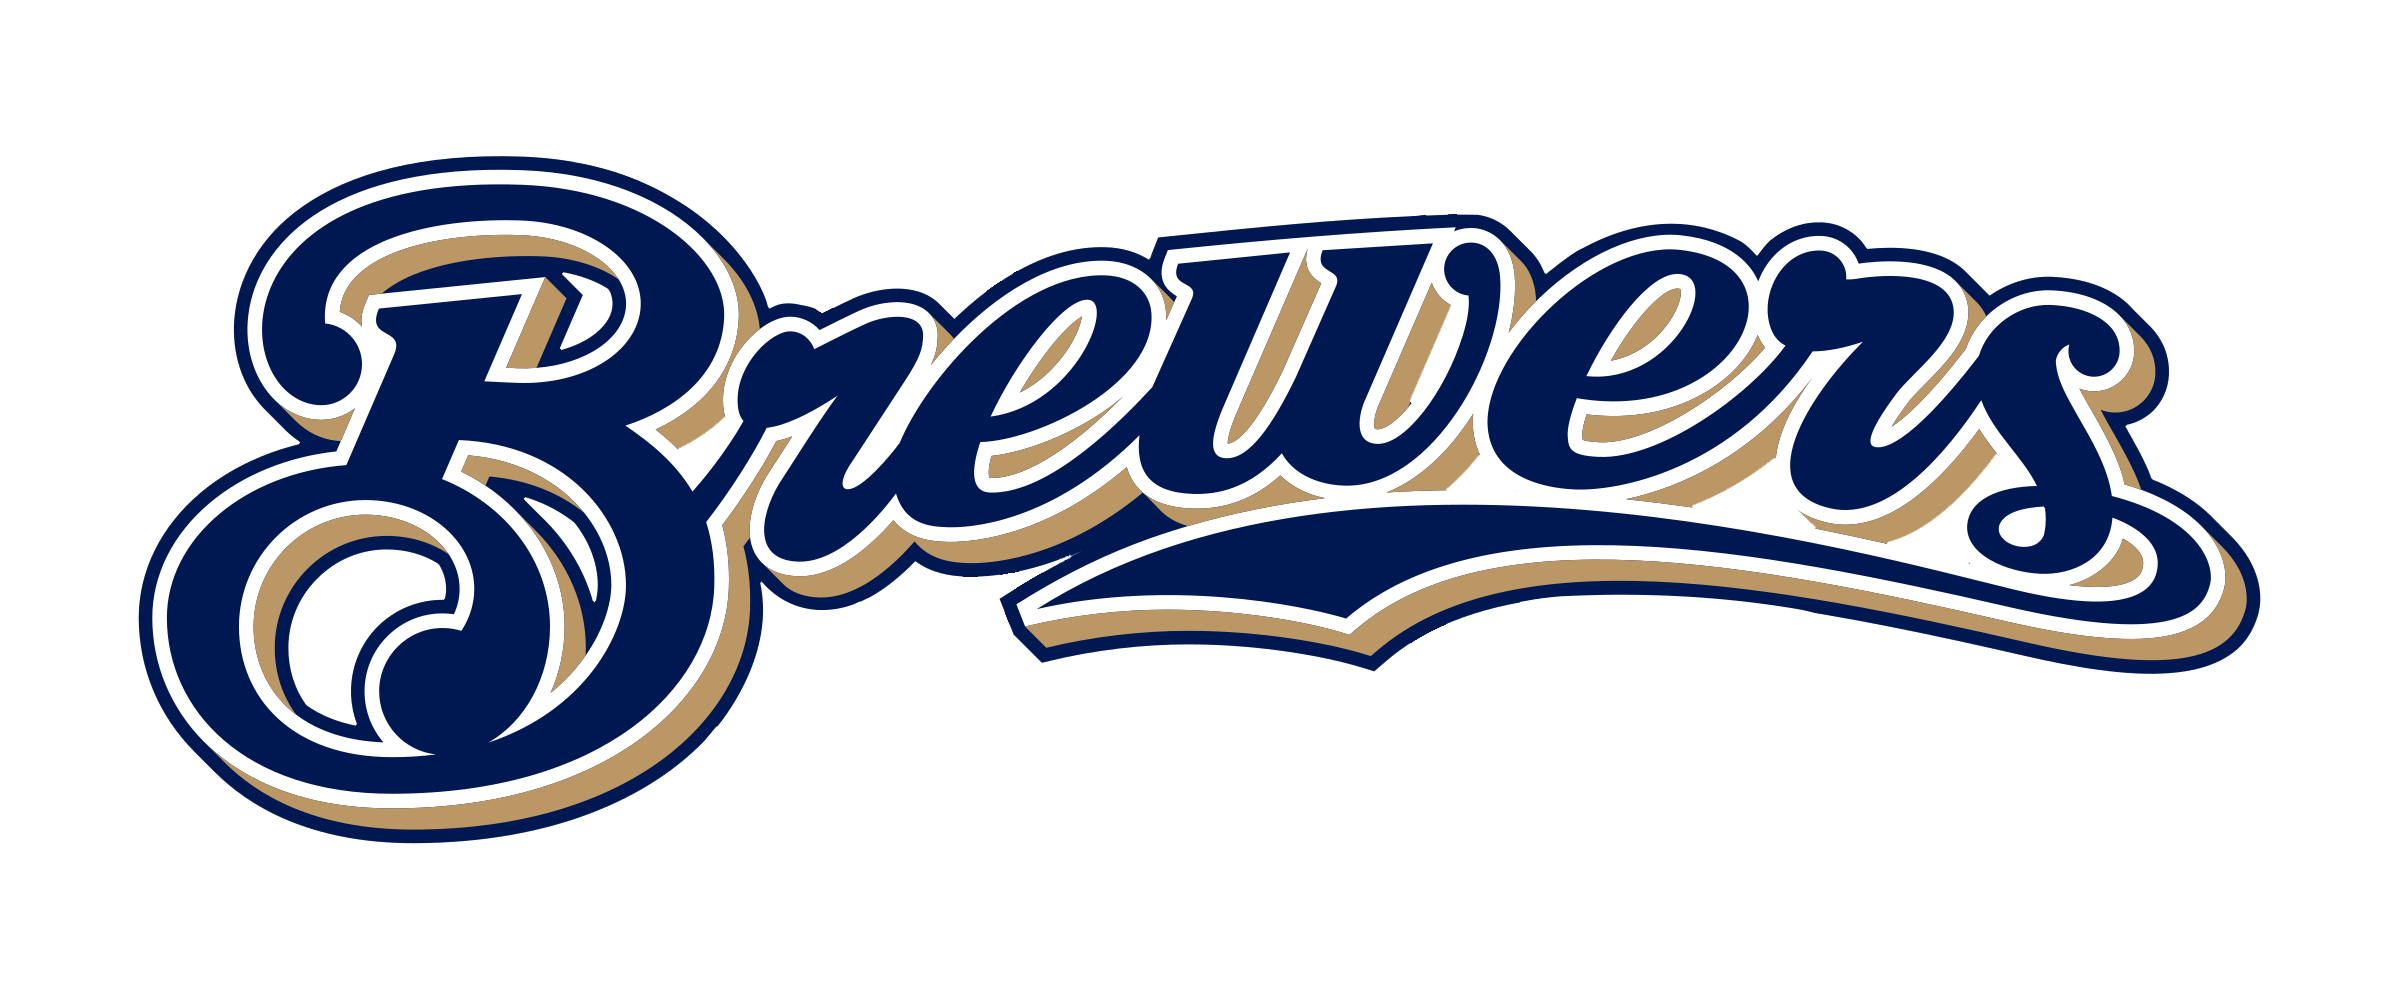 Milwaukee Brewers Logo - Milwaukee Brewers Logo PNG Transparent & SVG Vector - Freebie Supply